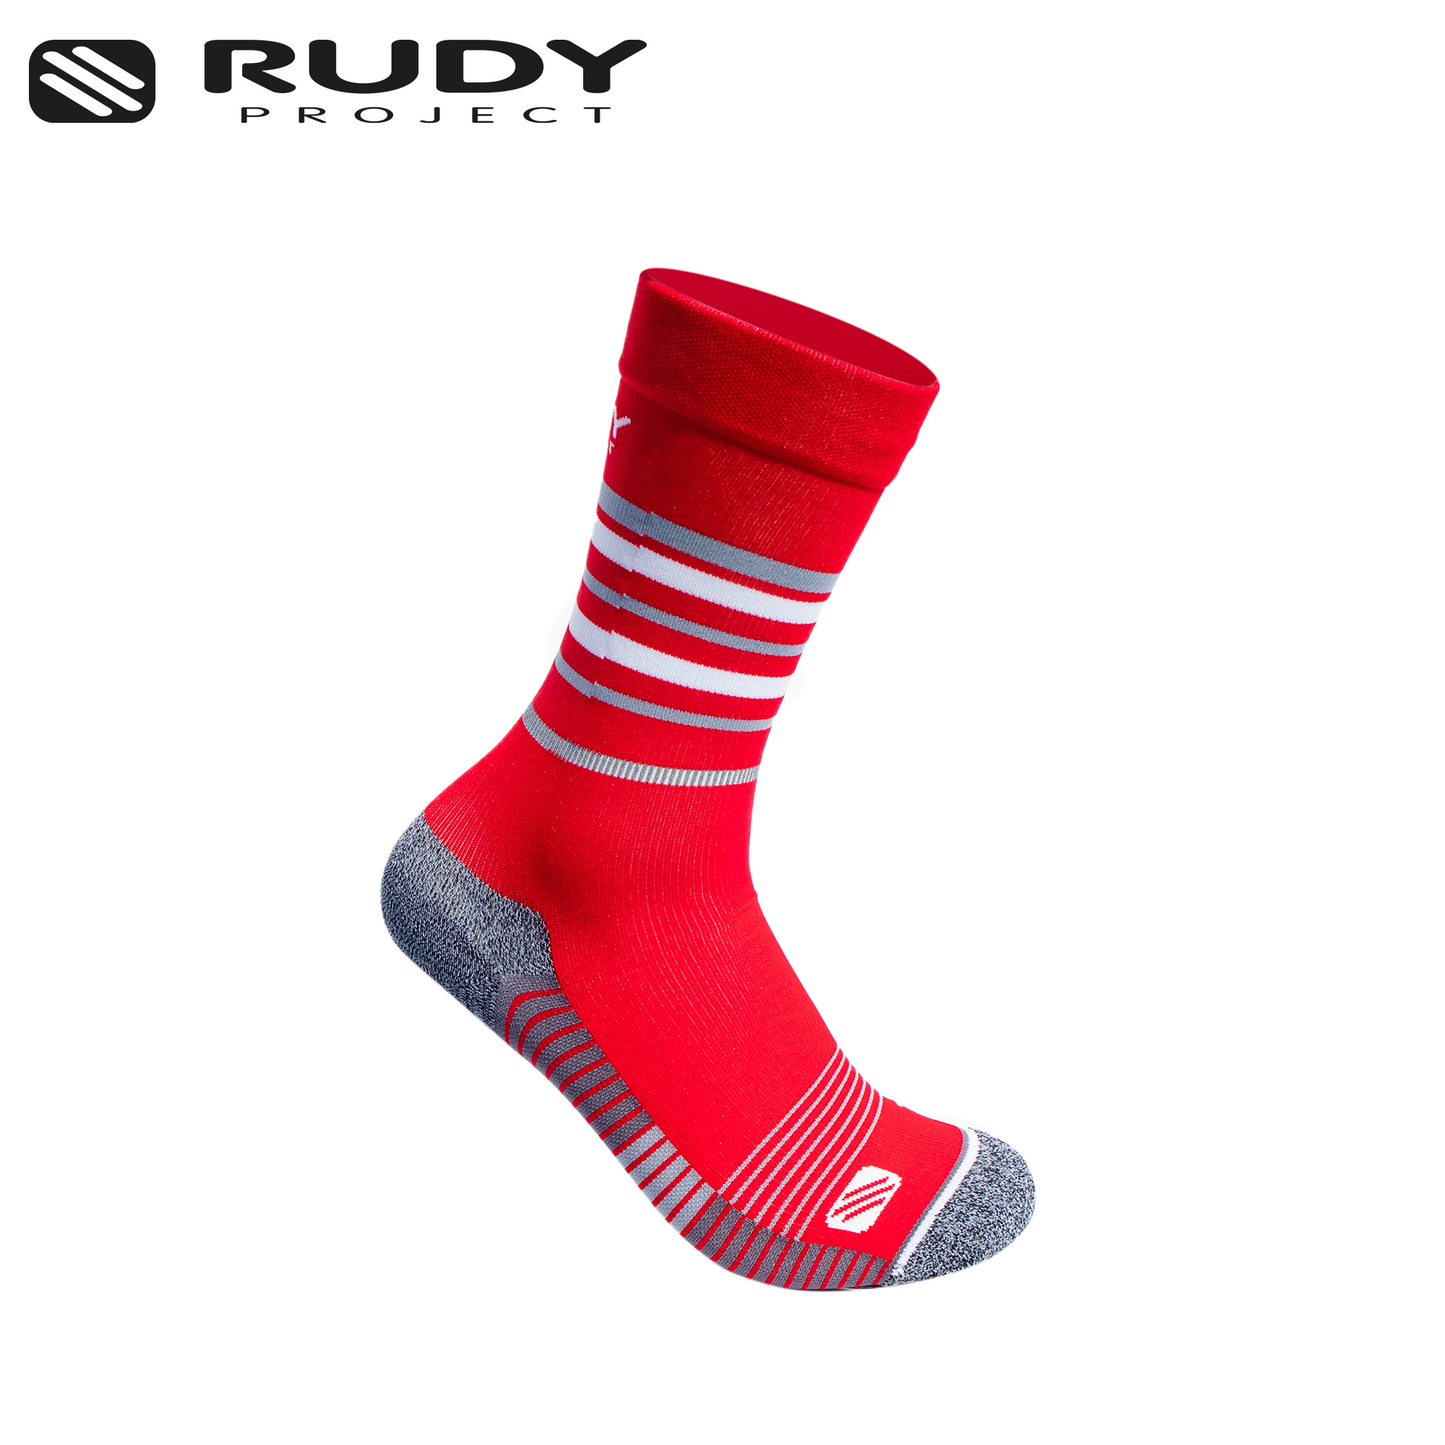 Rudy Project Long Cut Socks in Red